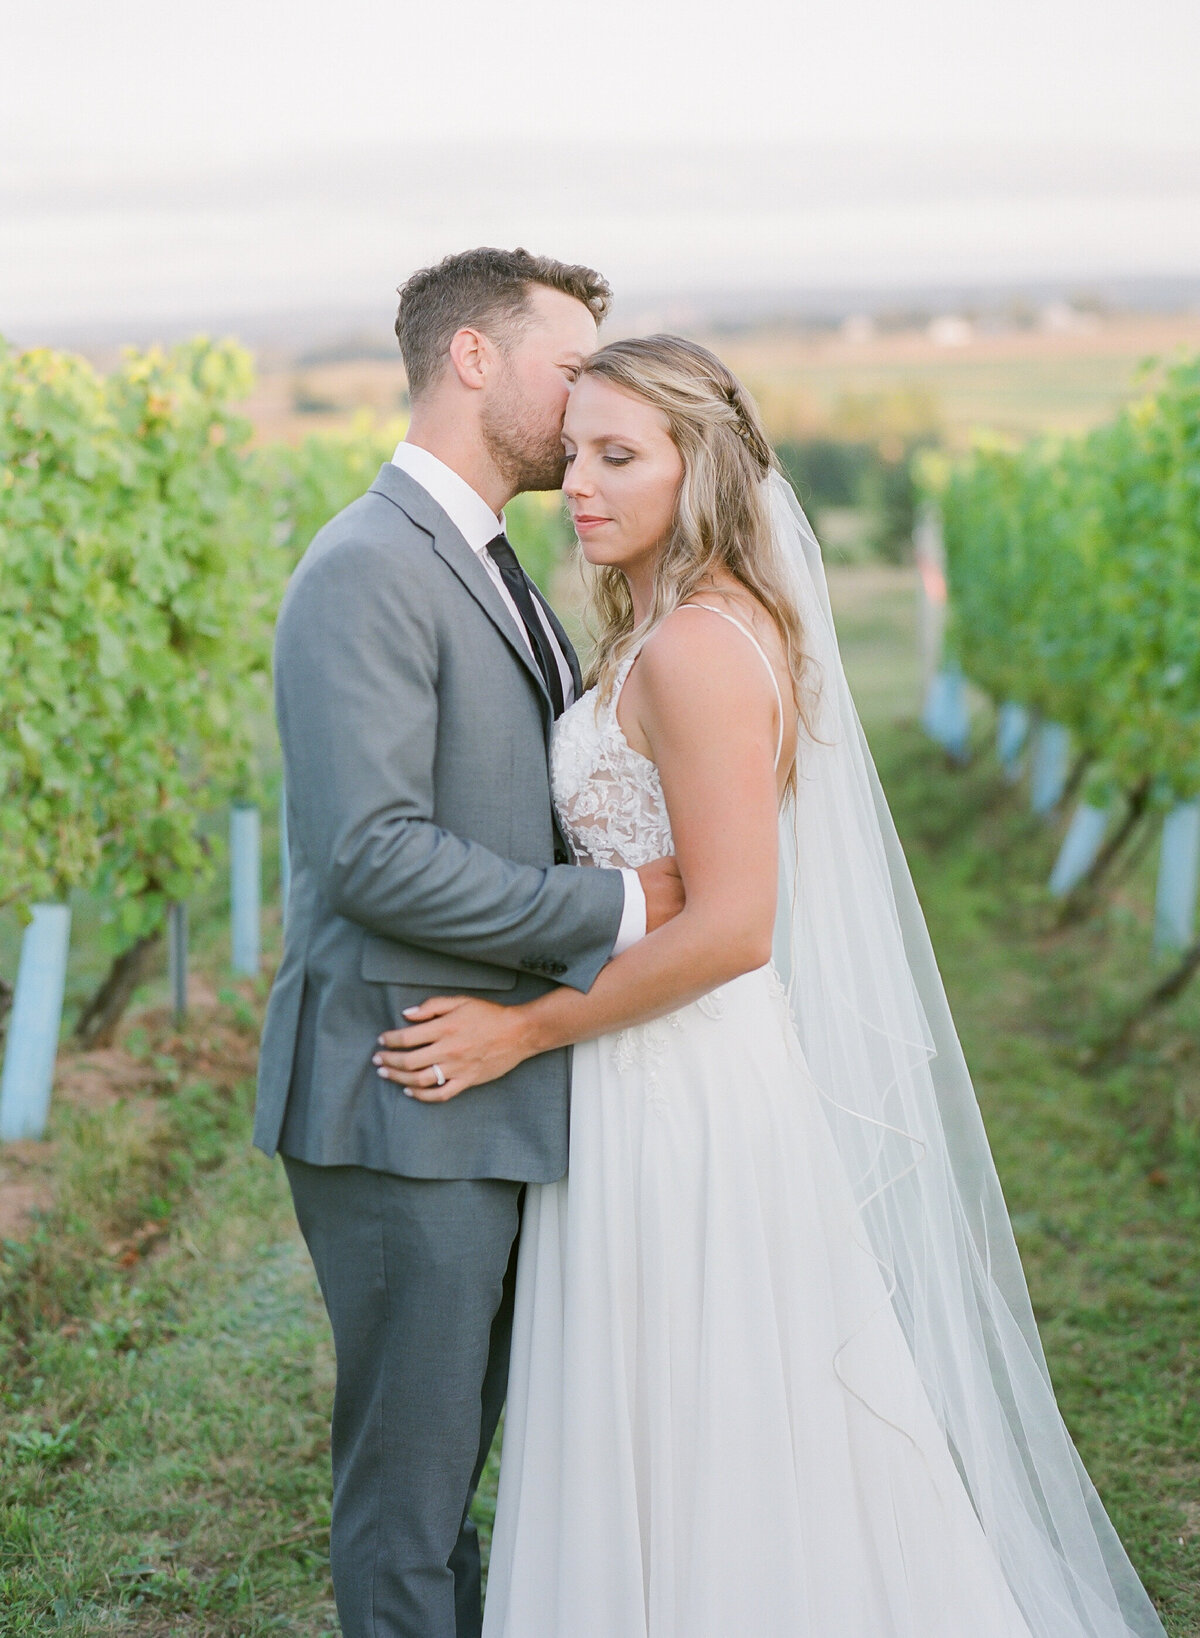 Jacqueline Anne Photography - Halifax Wedding Photographer - Samantha and Greg-550